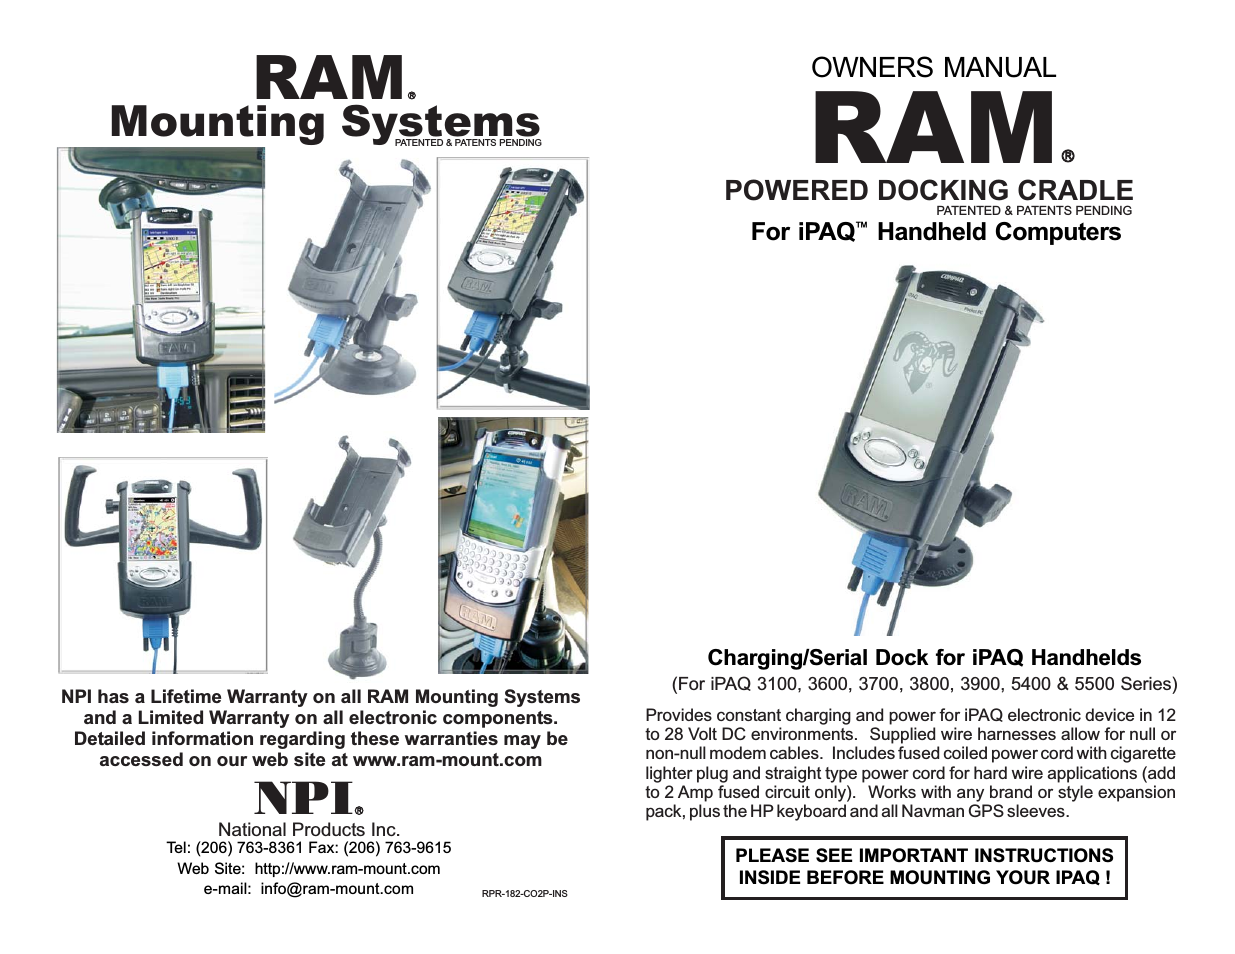 RAM iPaq PDA Powered Docking